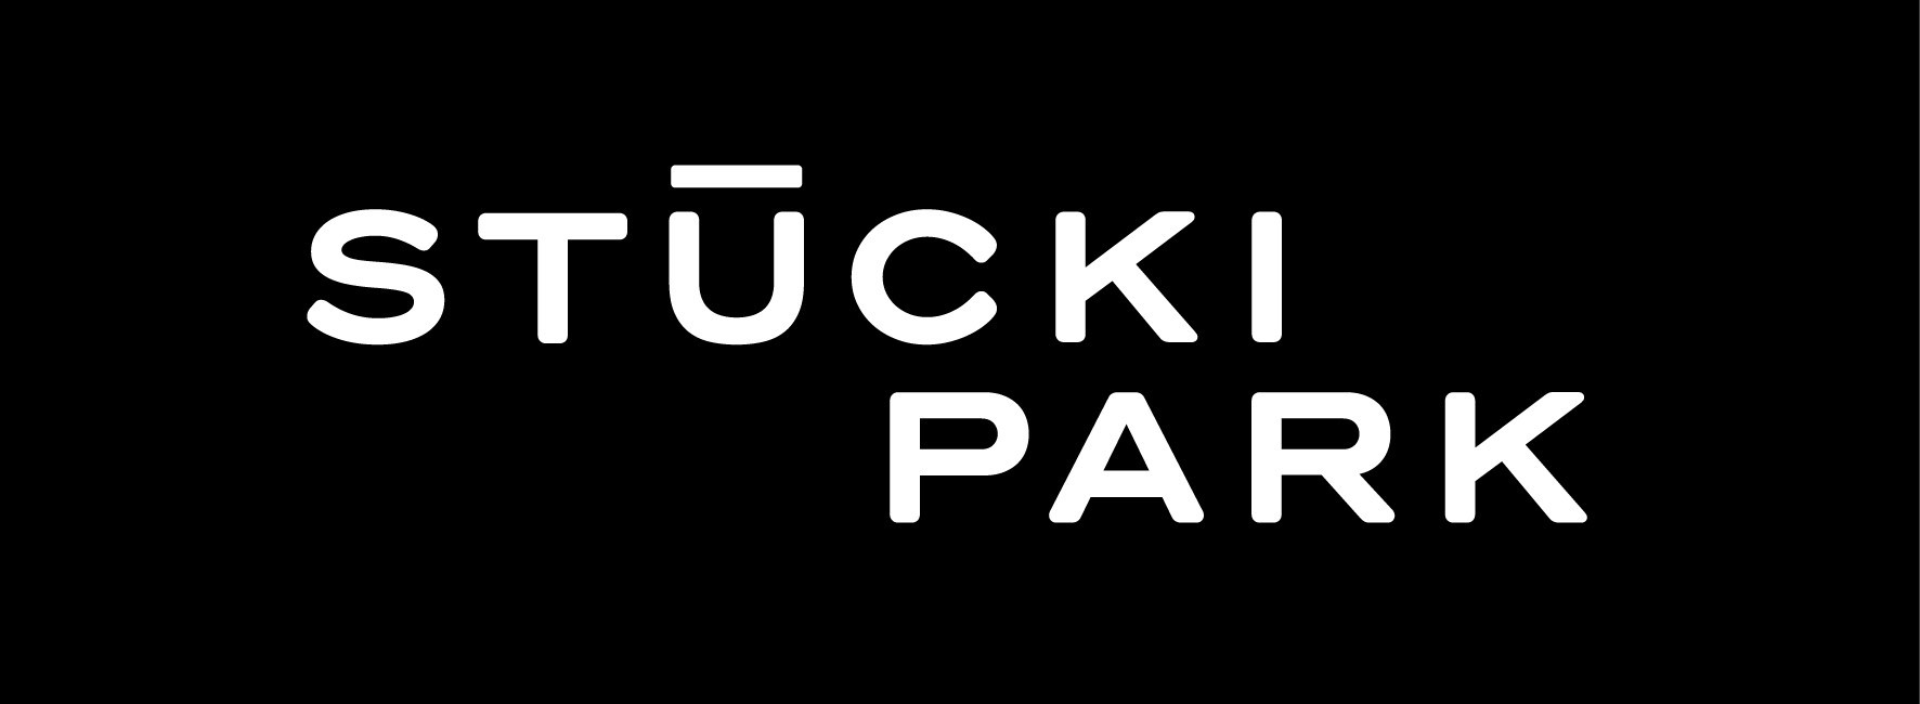 Stuecki Park Logo